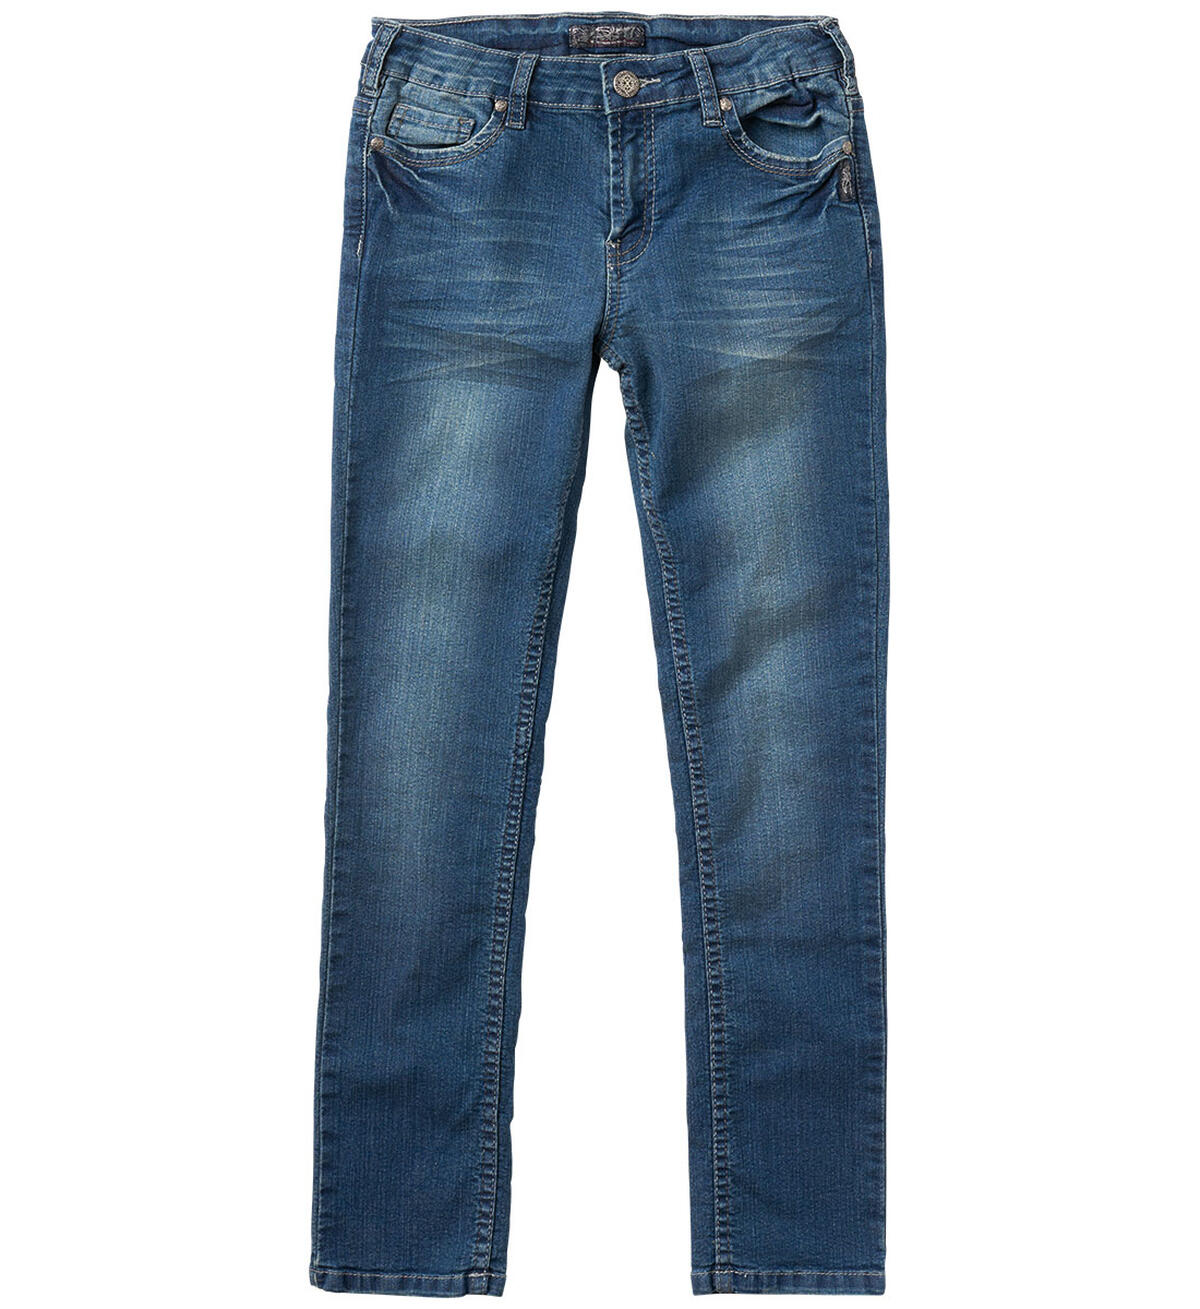 Sasha Skinny Jeans in Dark Wash (4-7), , hi-res image number 0